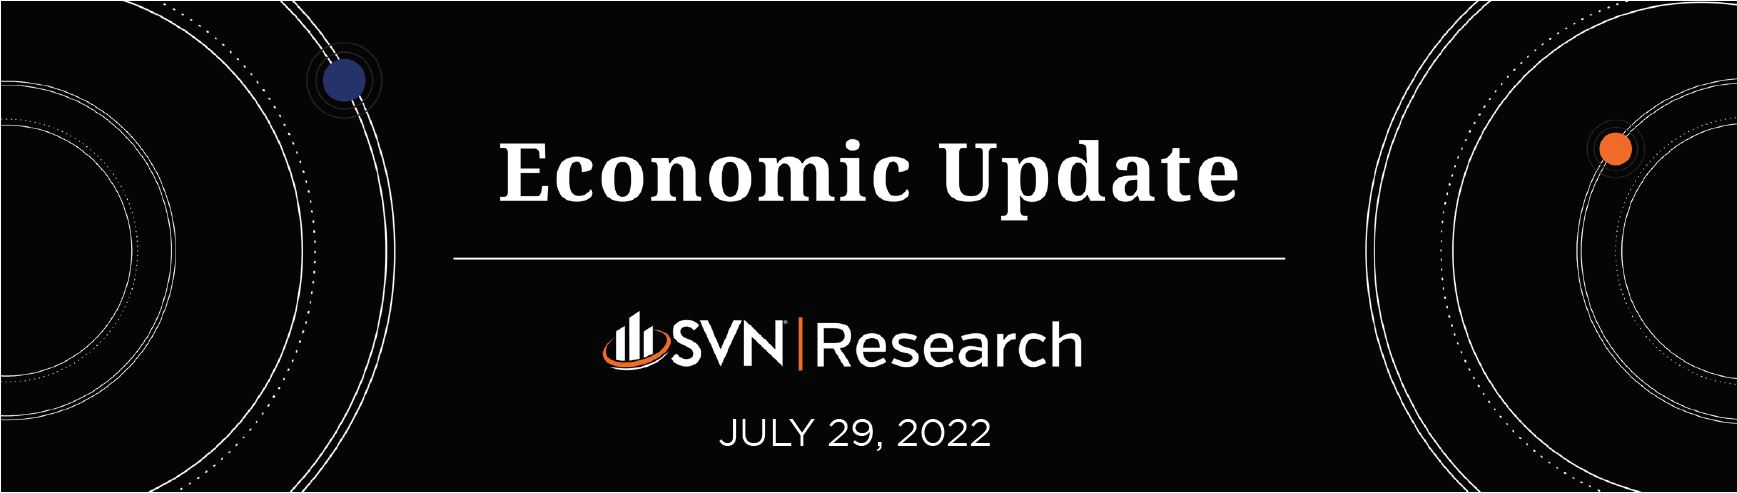 SVN | Research Economic Update 7.29.2022